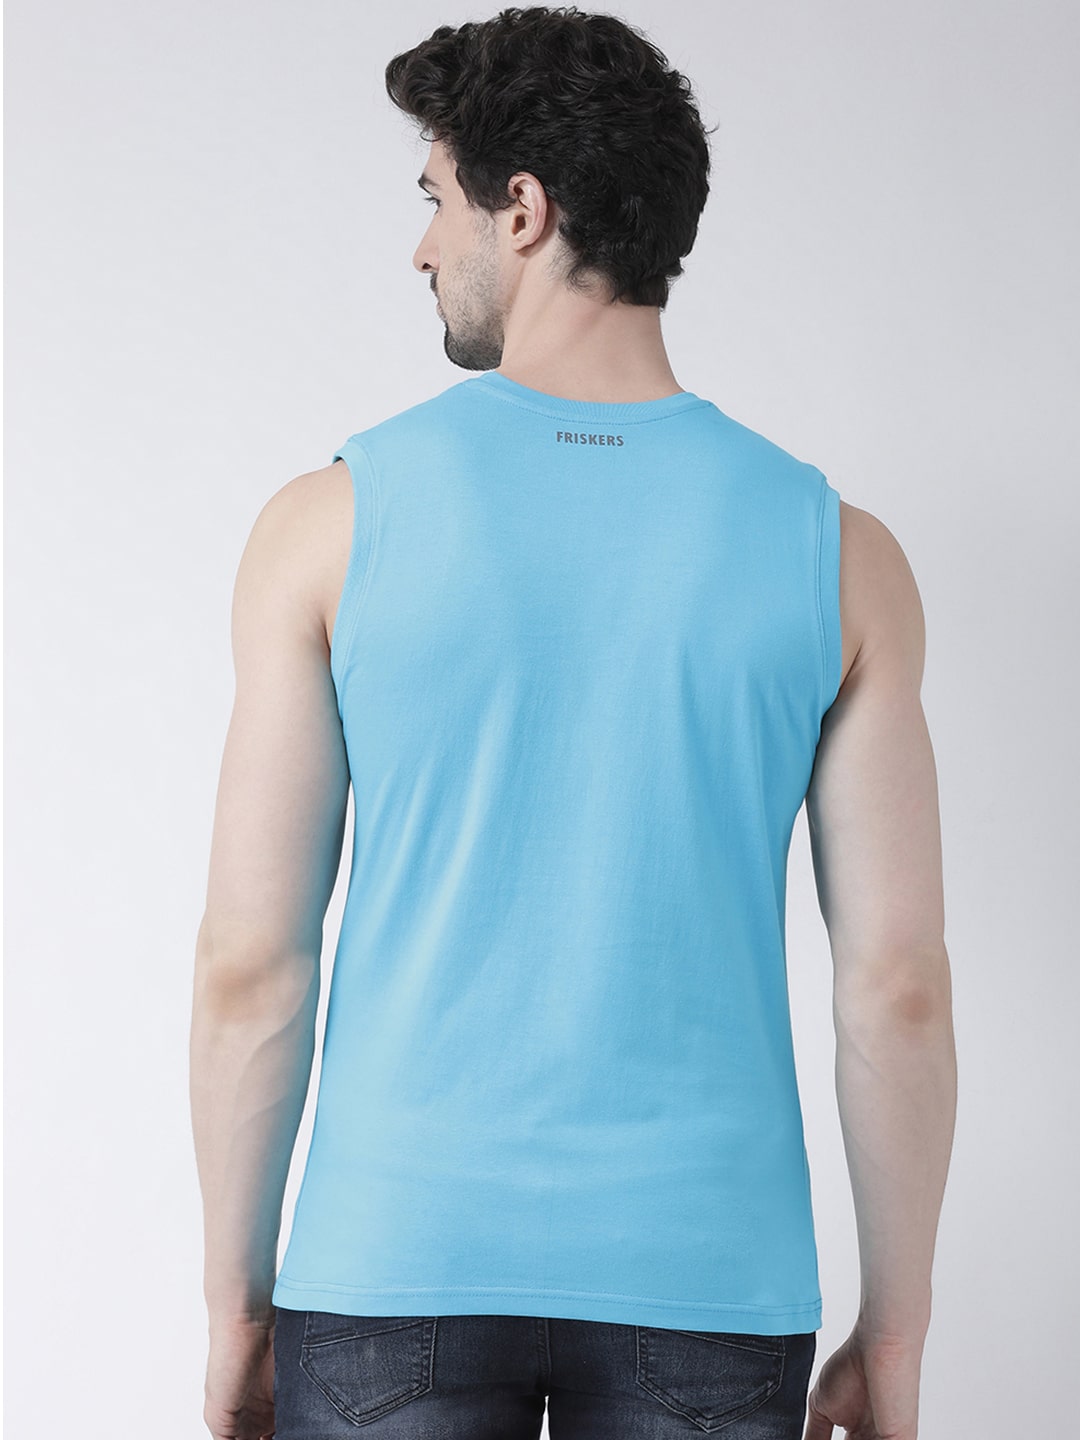 Men Original Printed Cotton Gym Vest - Friskers